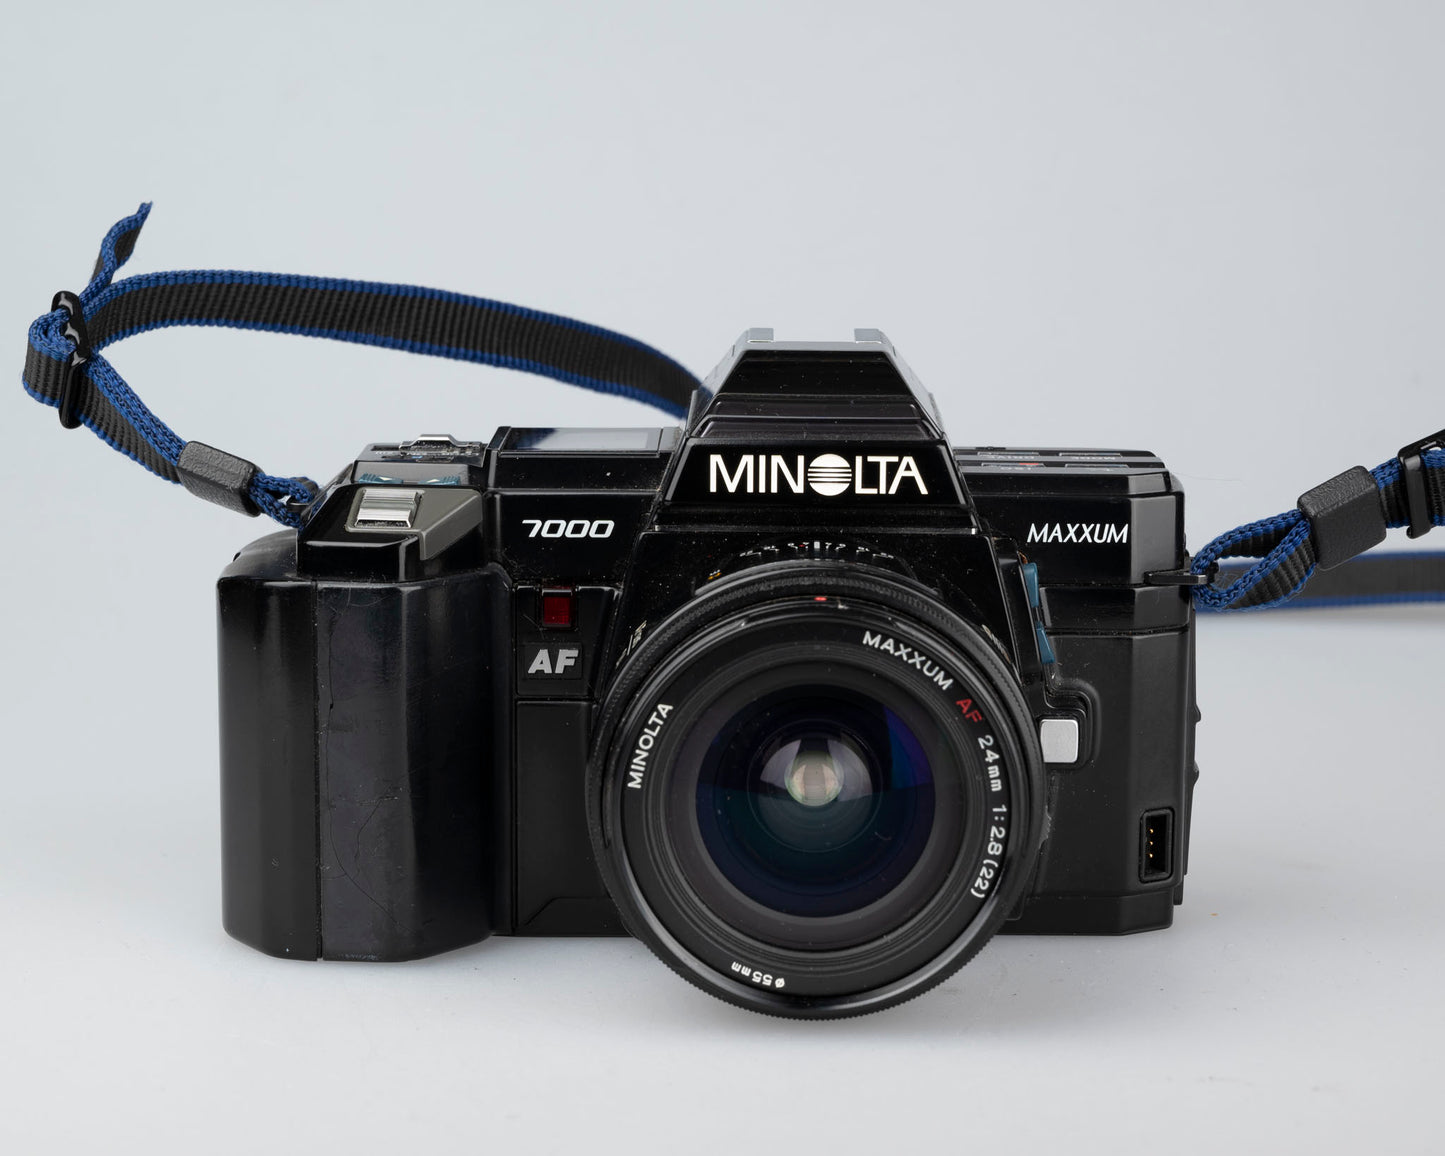 Minolta Maxxum 7000 Reflex à film 35 mm avec objectif 24 mm f2.8 (série 13102031)